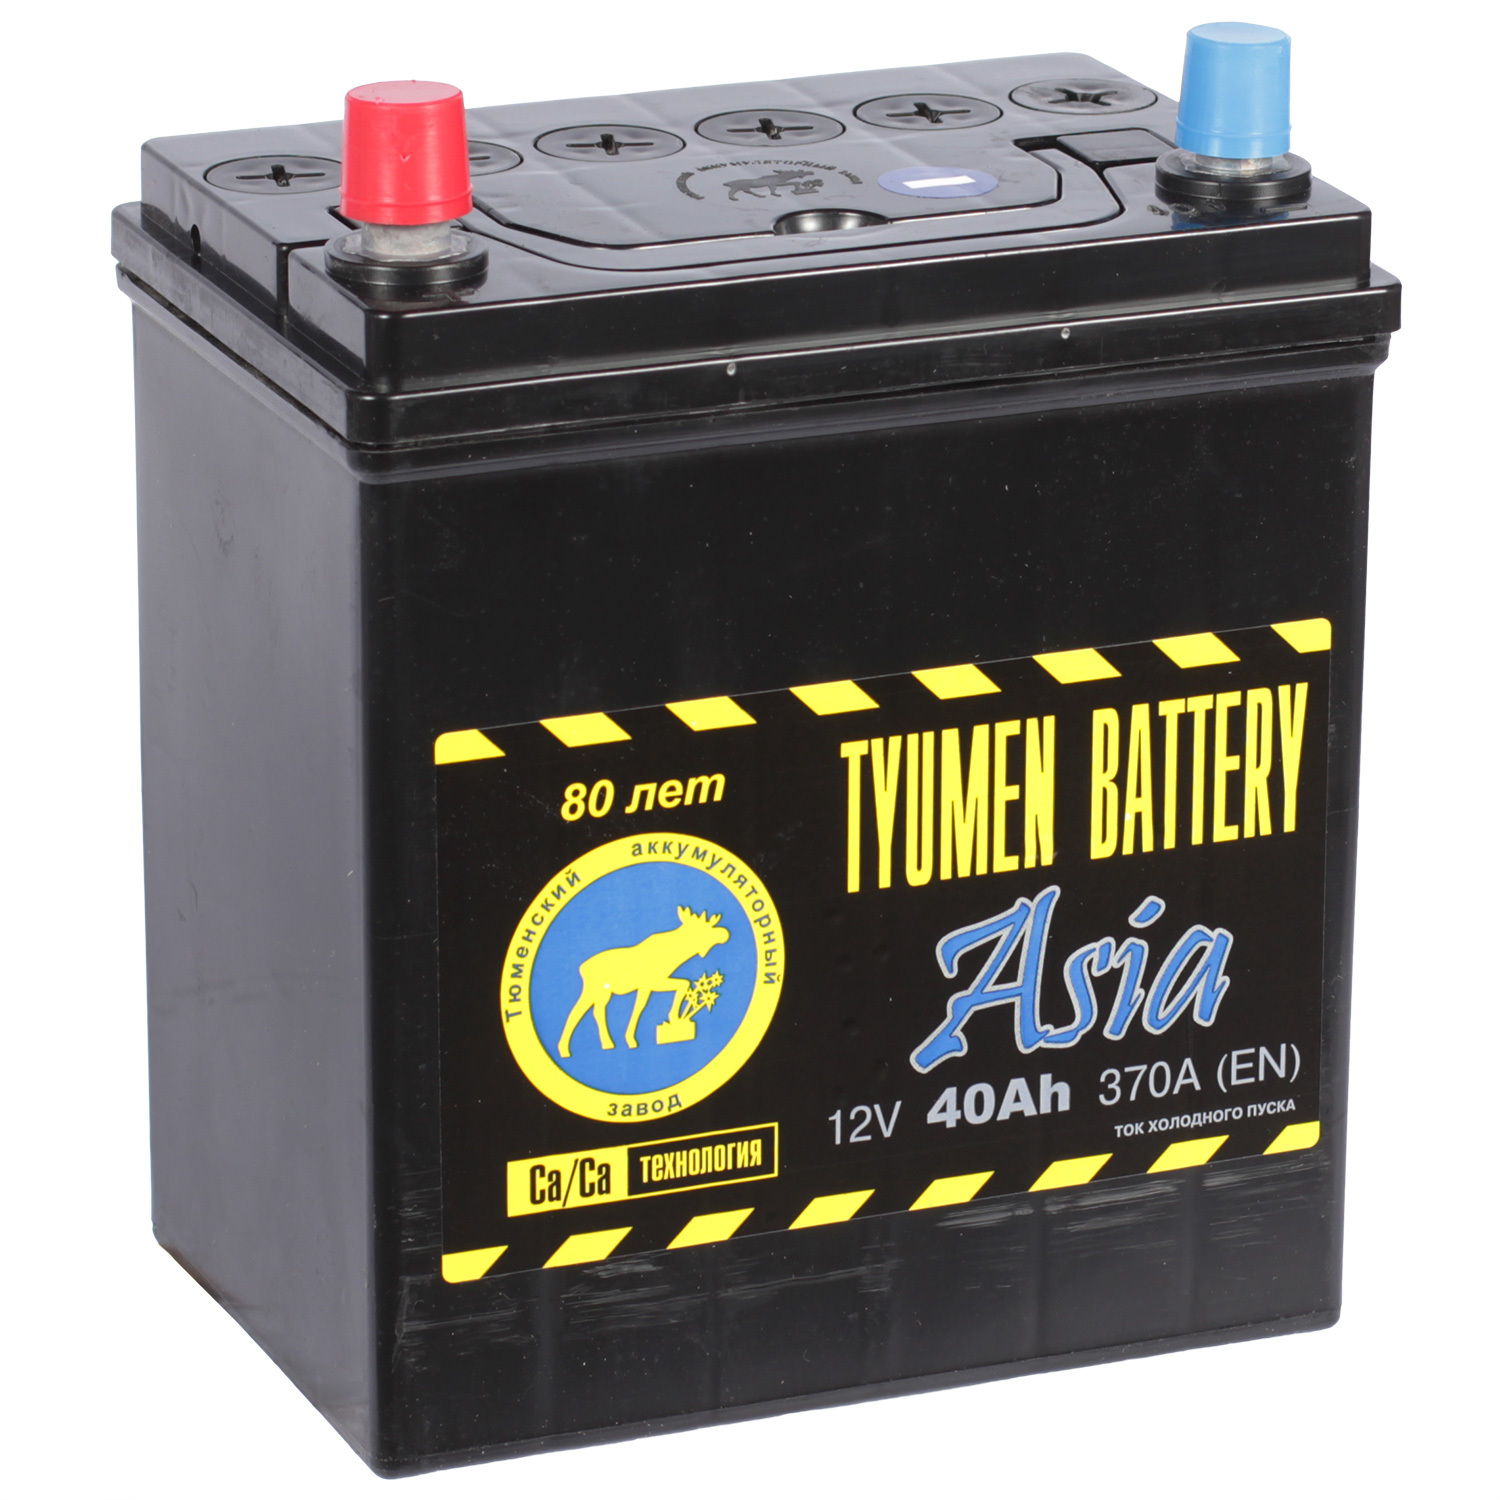 Tyumen Battery Автомобильный аккумулятор Tyumen Battery Asia 40 Ач прямая полярность B19R tyumen battery автомобильный аккумулятор tyumen battery asia 40 ач обратная полярность b19l